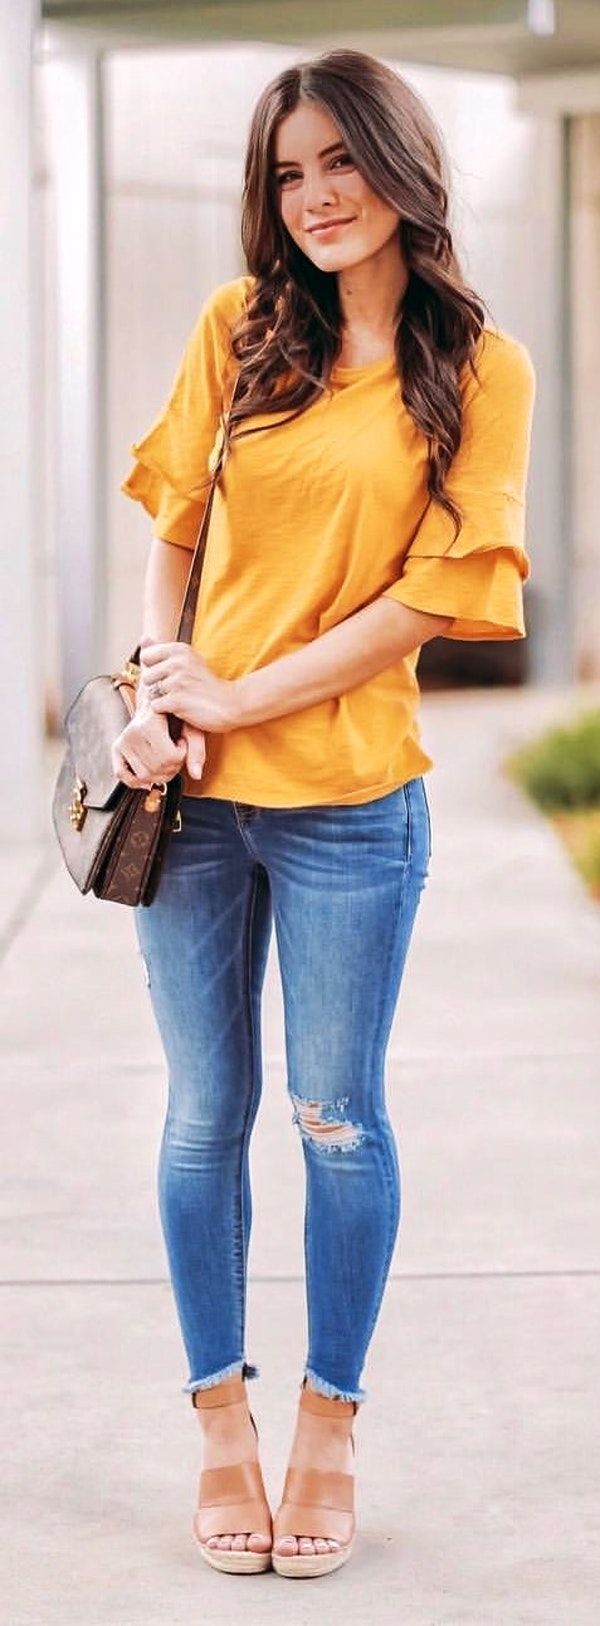 top amarillo y jeans outfit ideas mujeres: Cuello redondo,  Outfits Amarillo Niñas,  tapa amarilla  